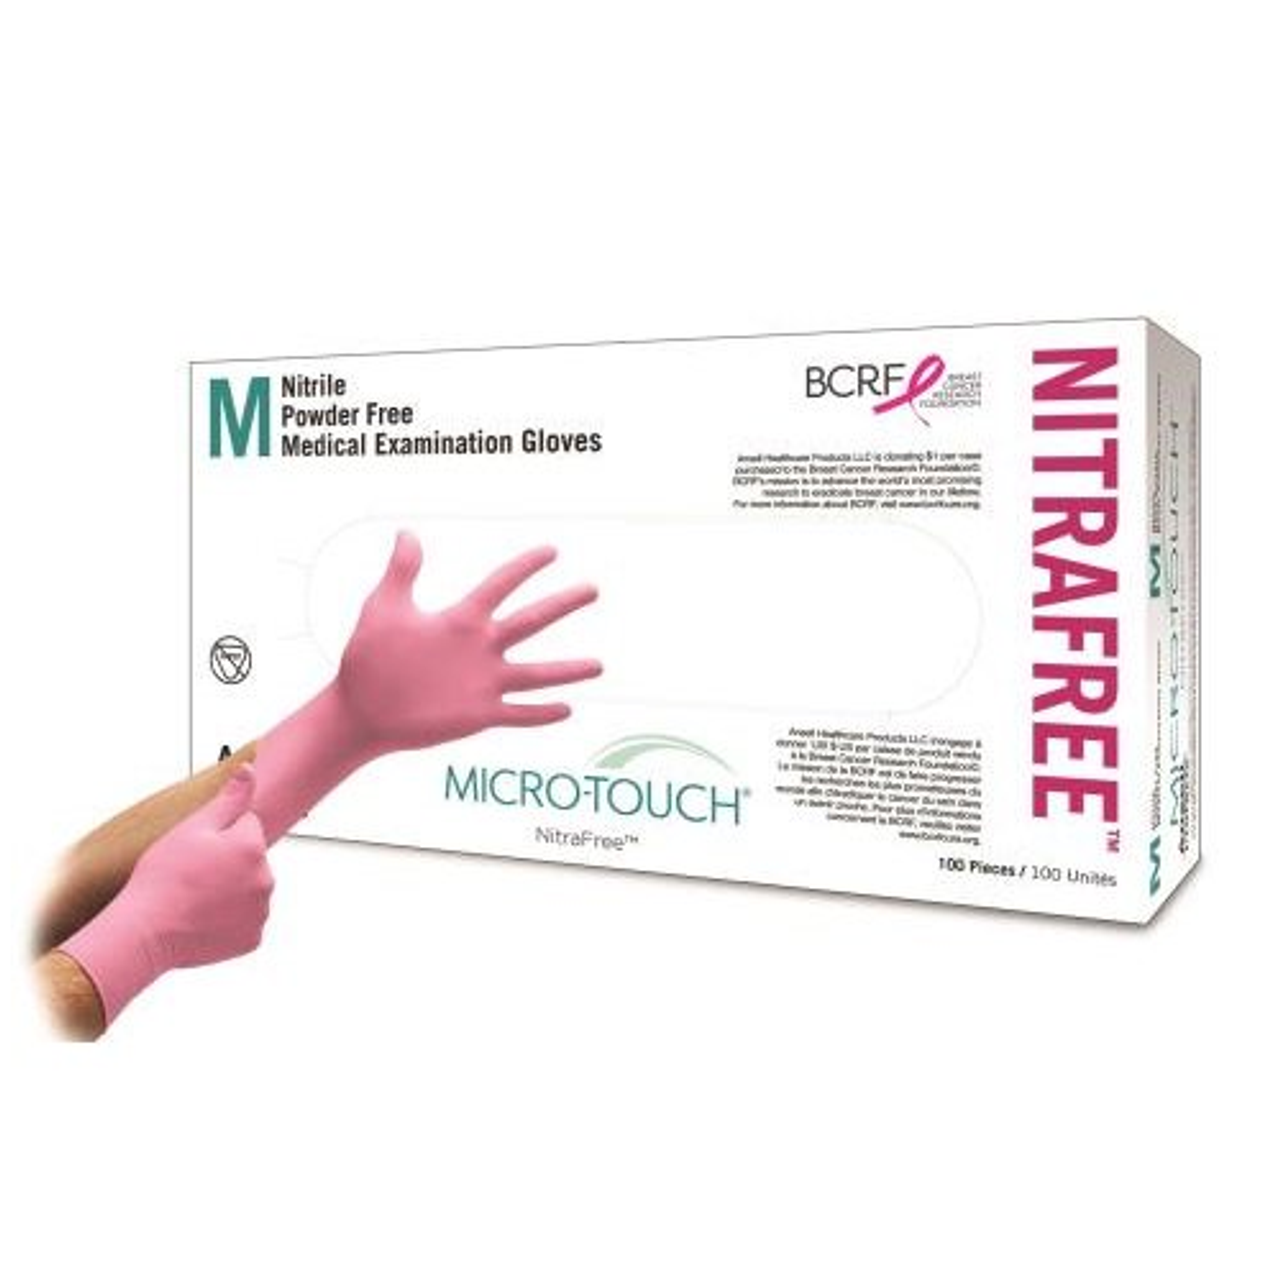 Ansell Micro-Touch Nitrafree Examination Gloves Medium, Pink, 100/bx